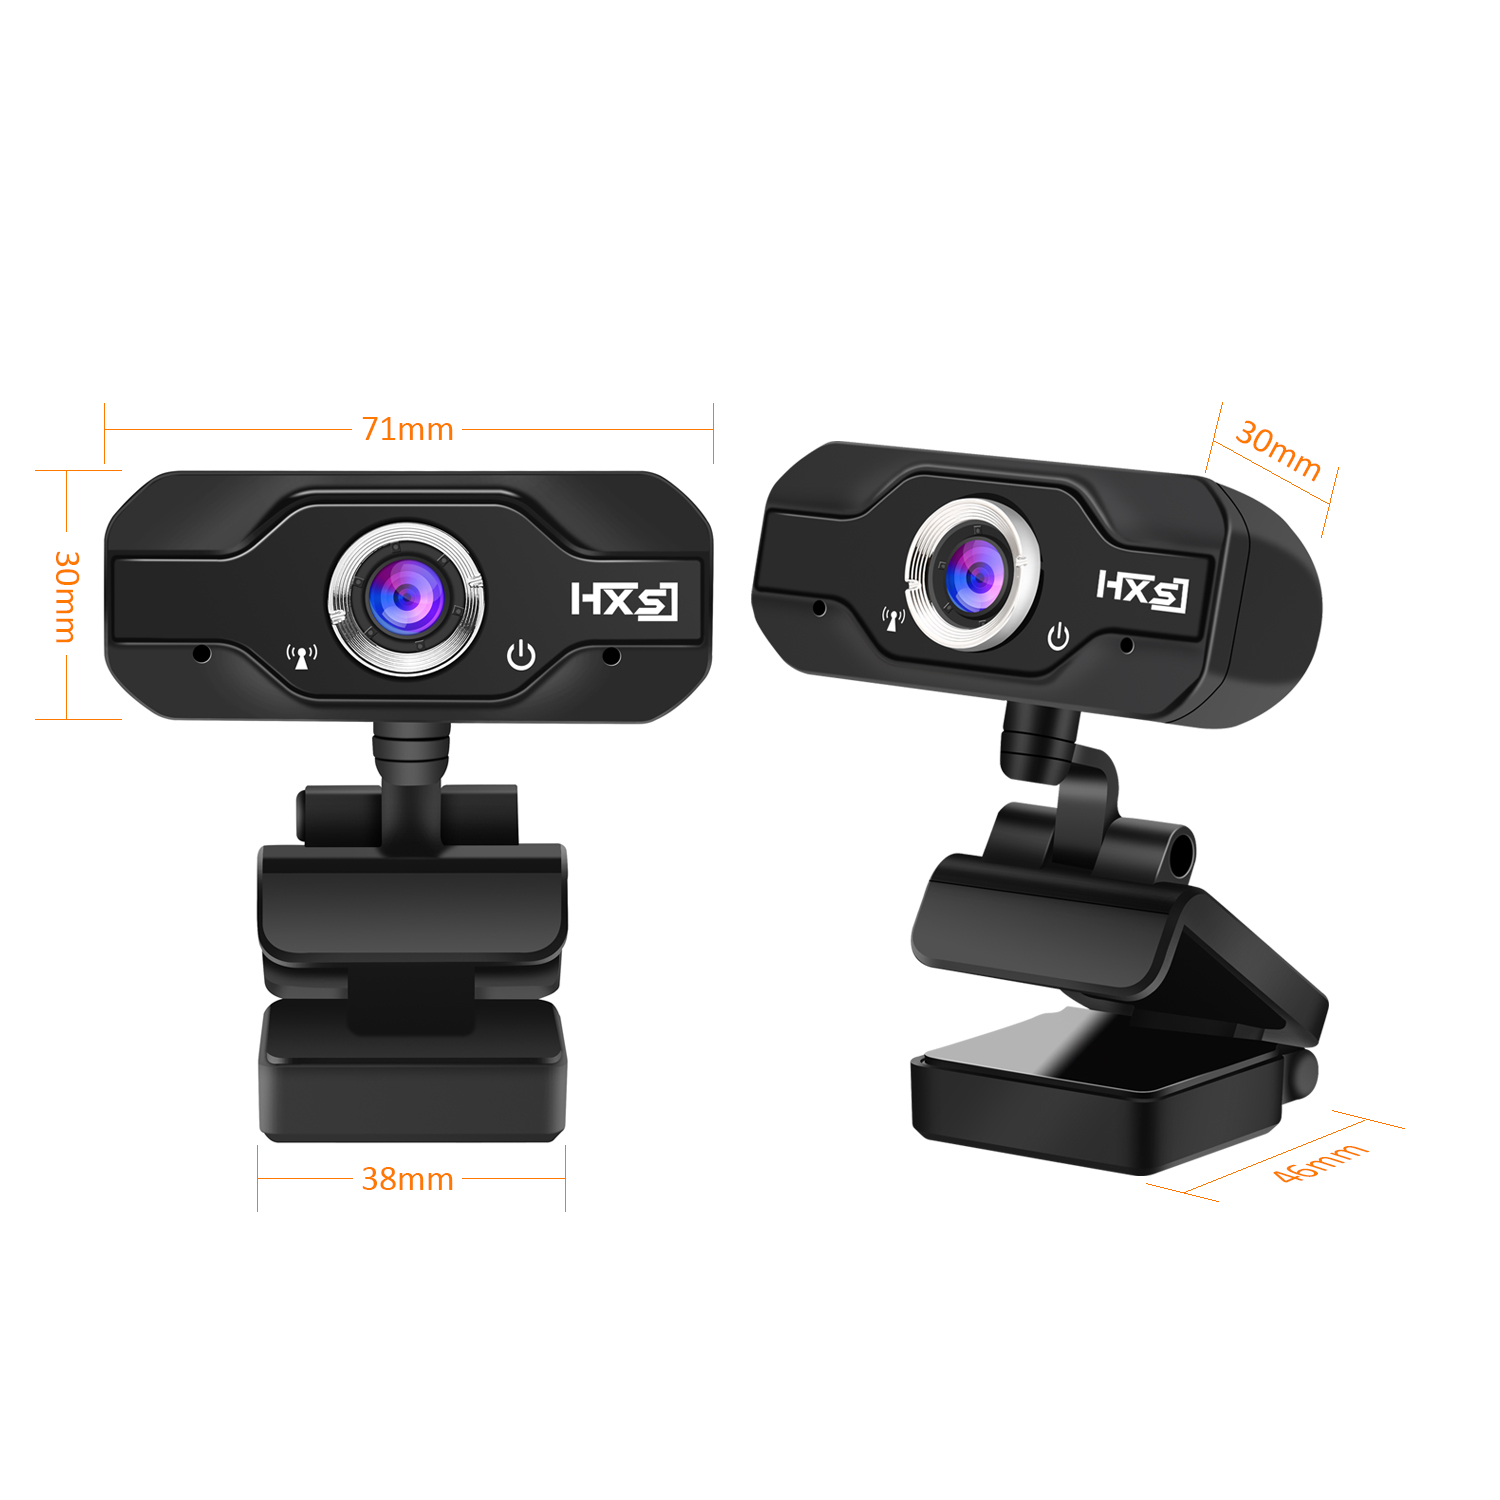 HXSJ HD 720P CMOS Sensor Webcam Built-in Microphone Adjustable Angle for Laptop Desktop 10